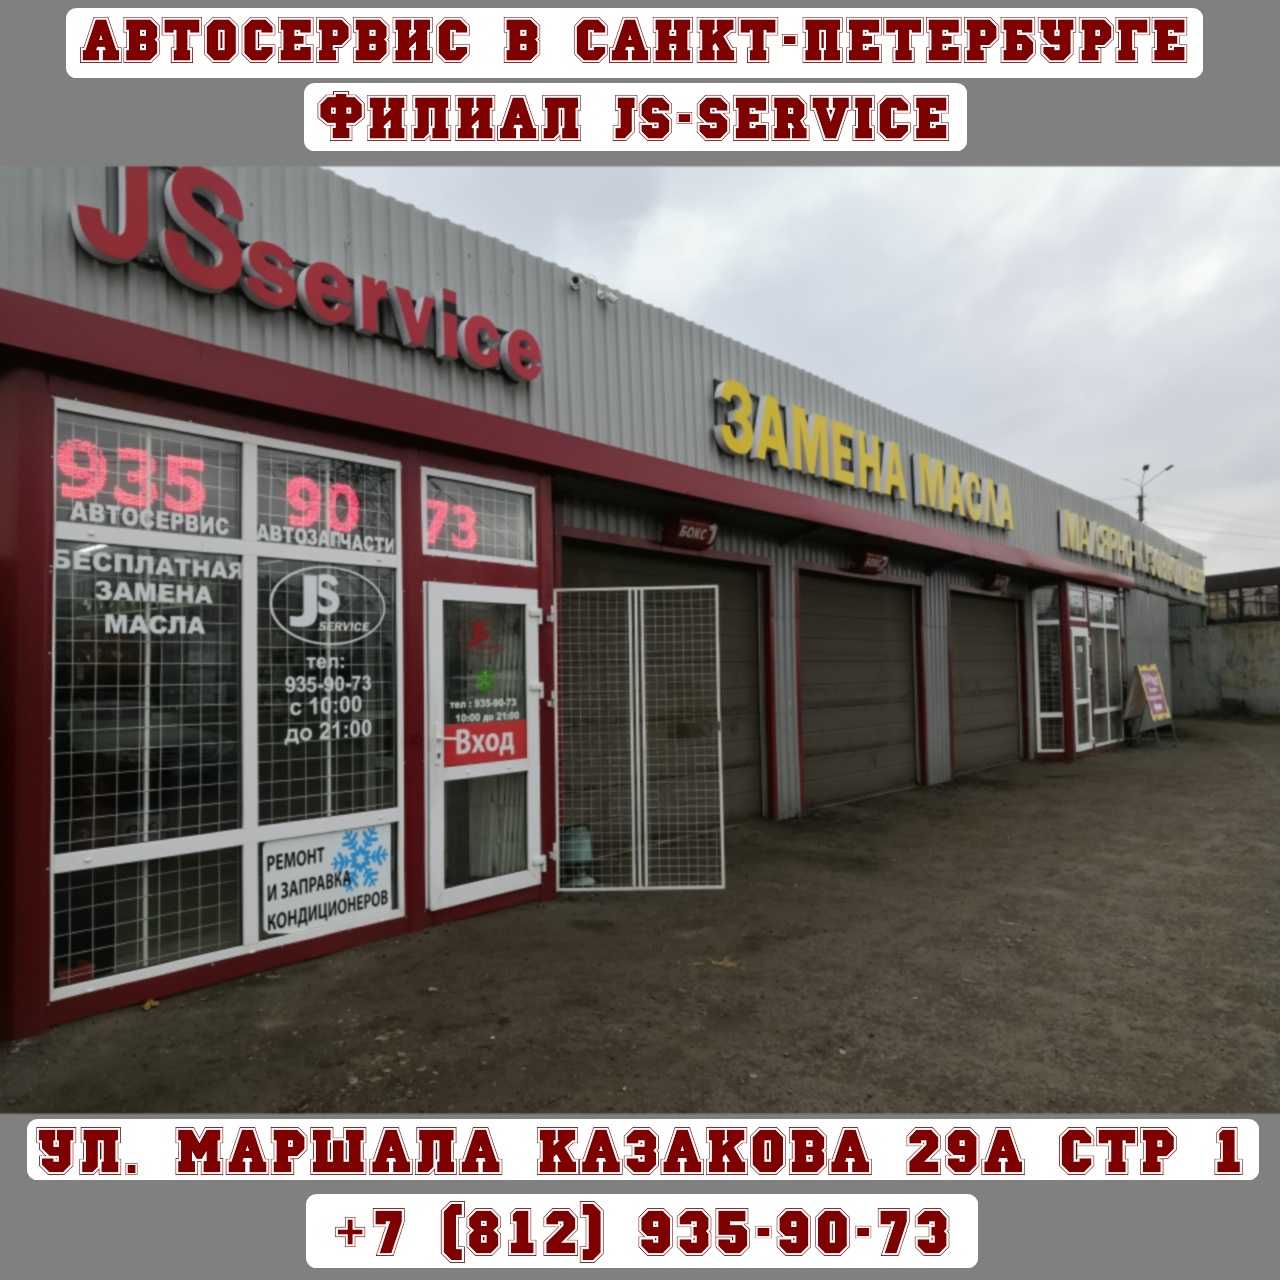 Автосервис JS-SERVICE в Санкт-Петербурге, ул. Маршала Казакова, 29Астр1